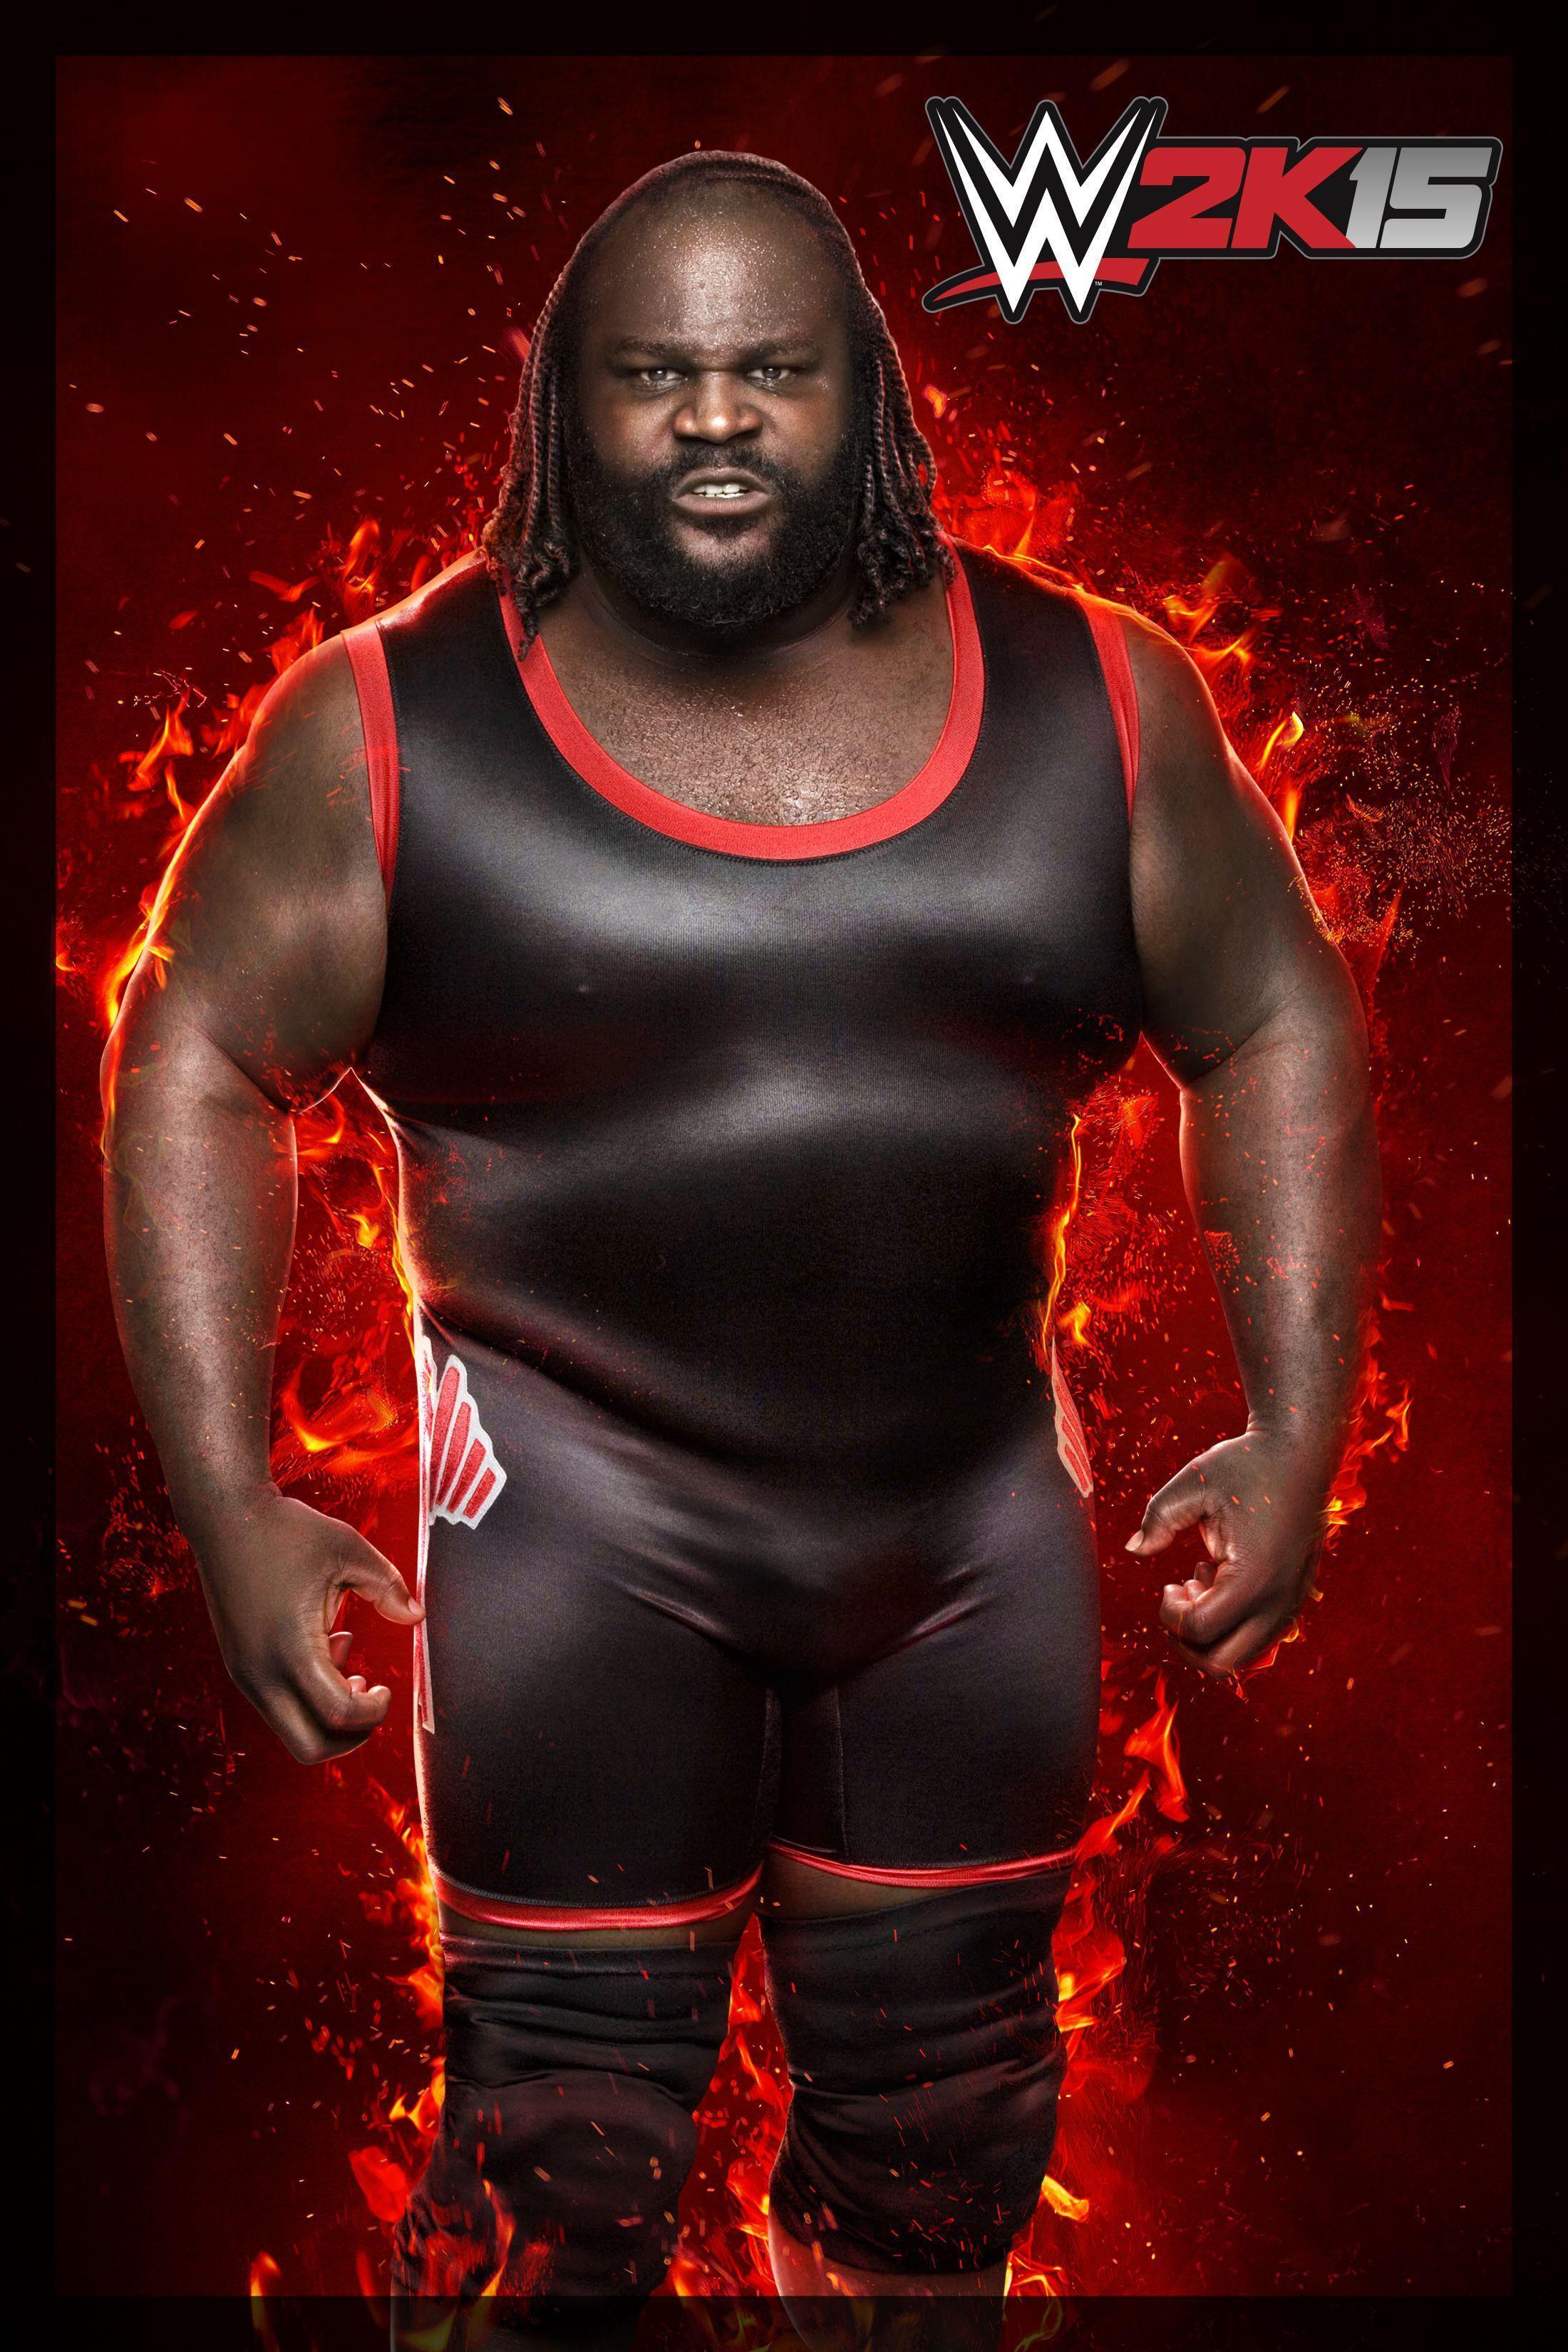 WZ Photo Gallery: Brand New WWE 2k15 Roster Image feat. Daniel